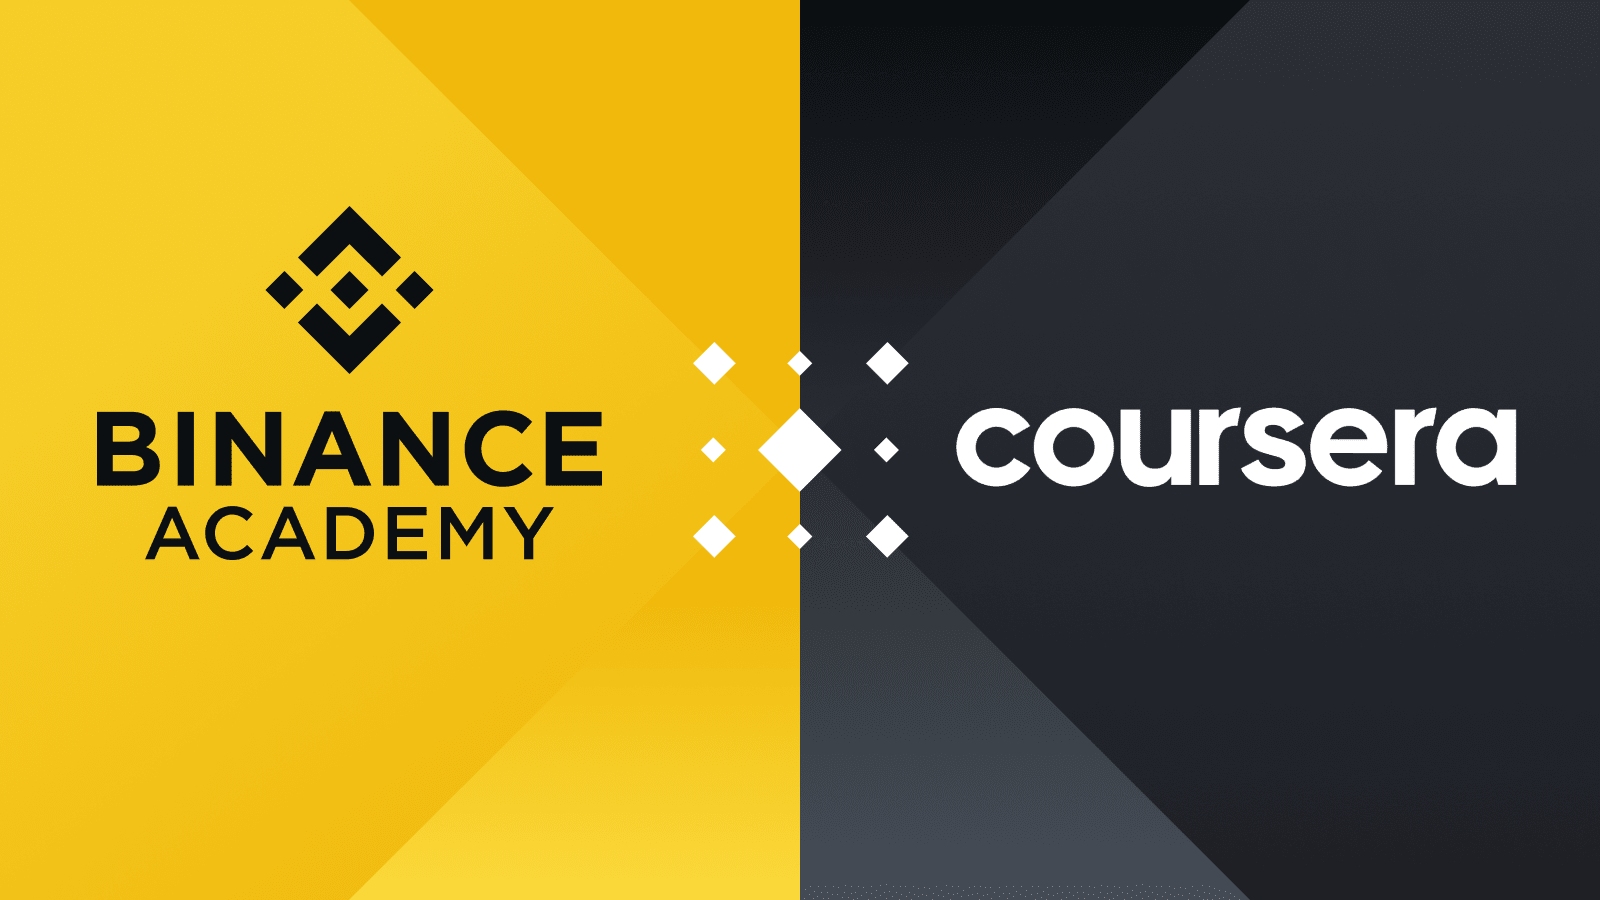 Binance Academy partner with  Coursera to provide blockchain education worldwide